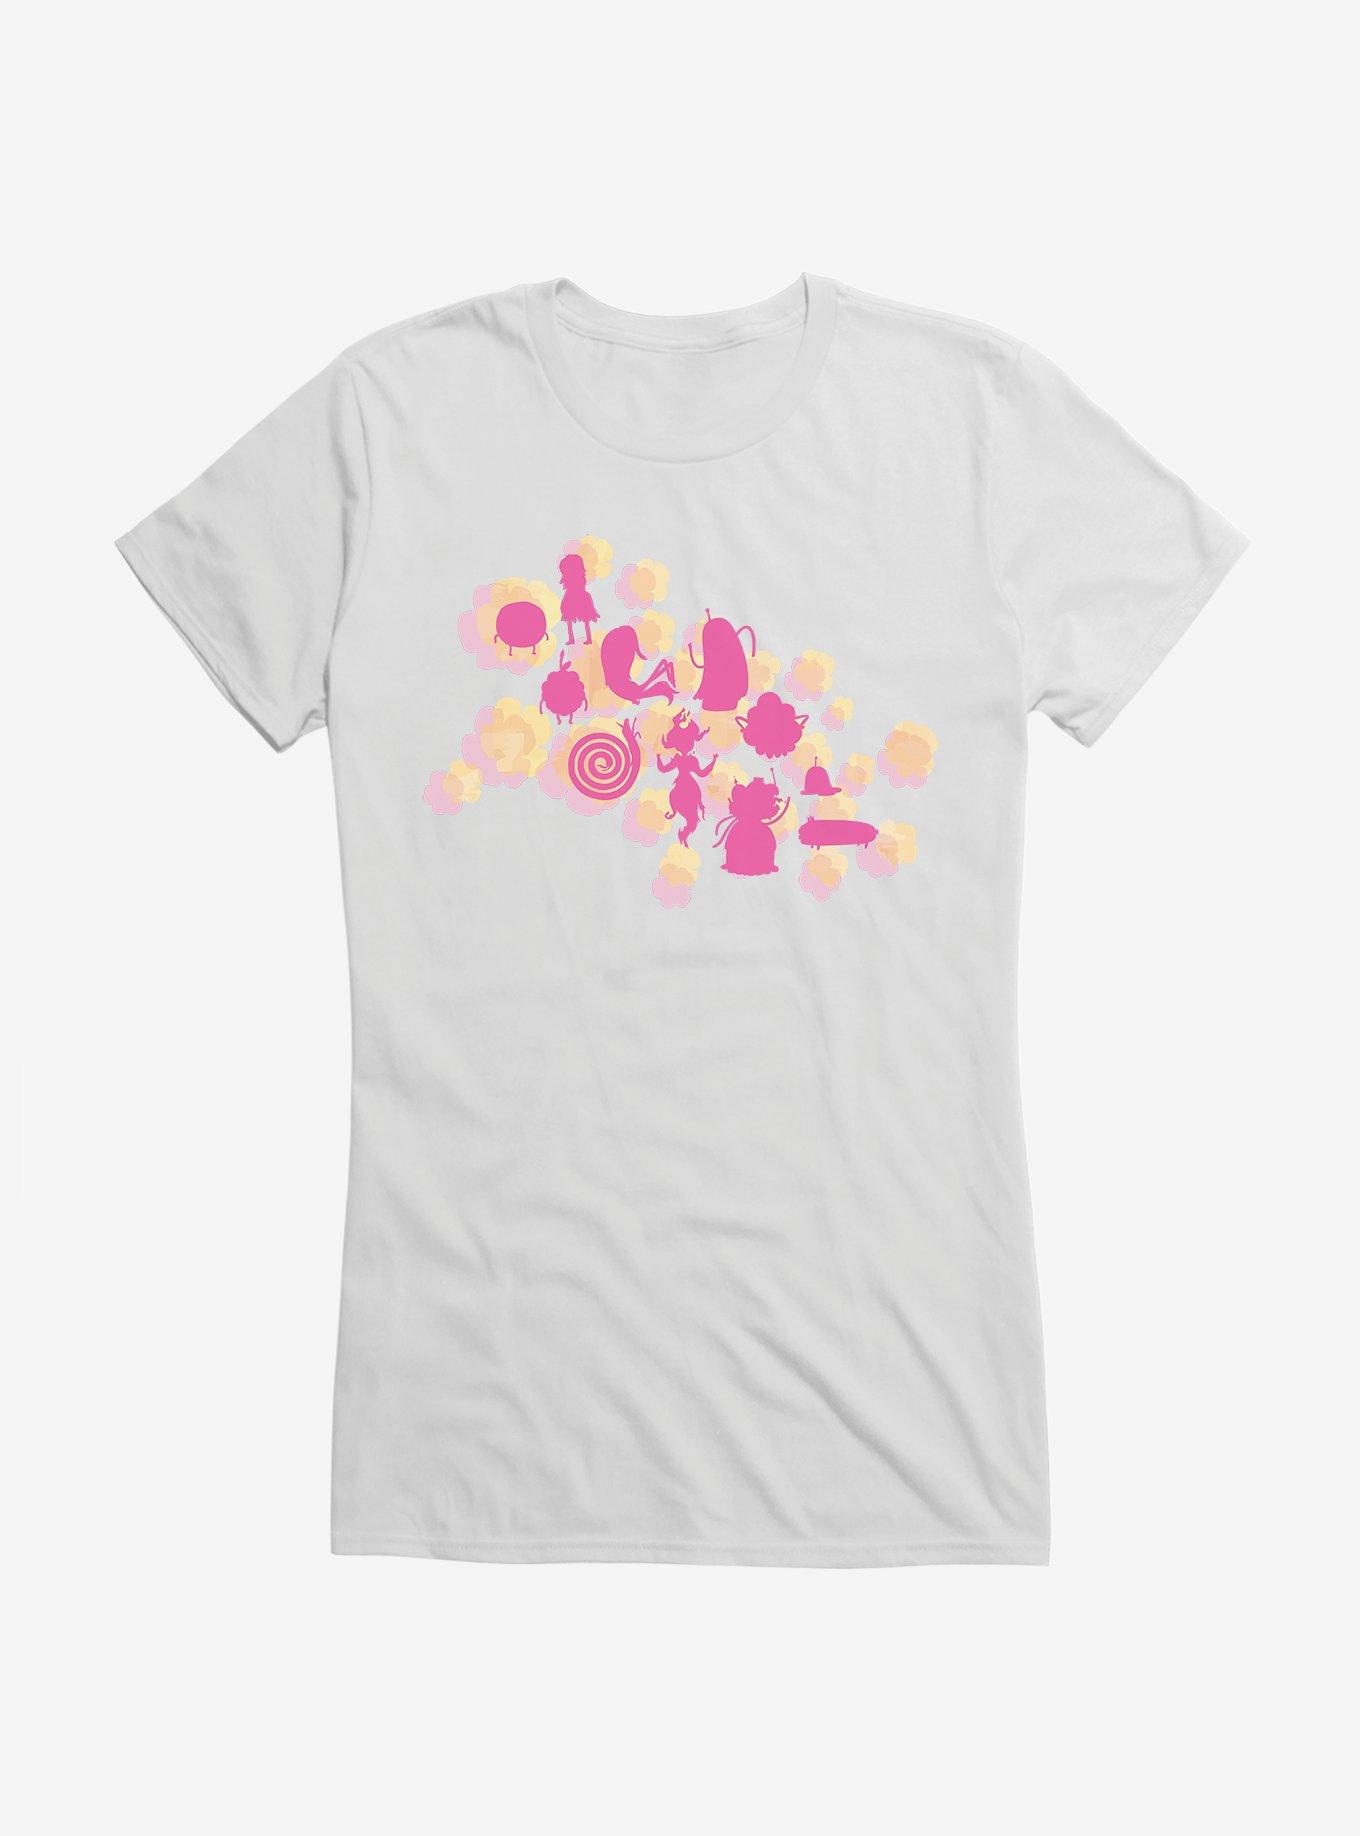 Adventure Time Silhouette Flowers Girls T-Shirt